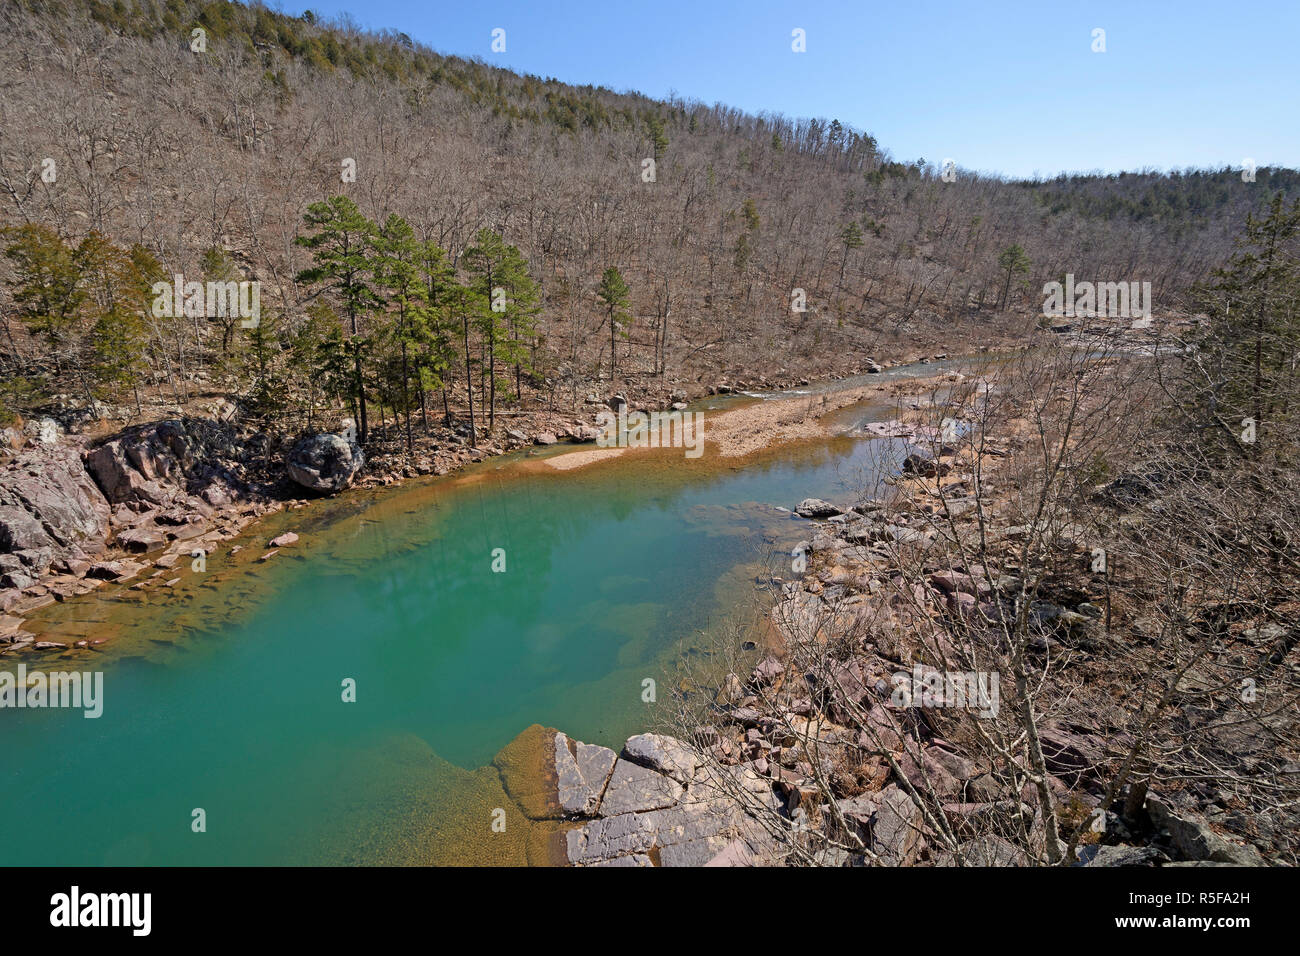 Aqua Colored Pond in a Wilderness Stream Stock Photo